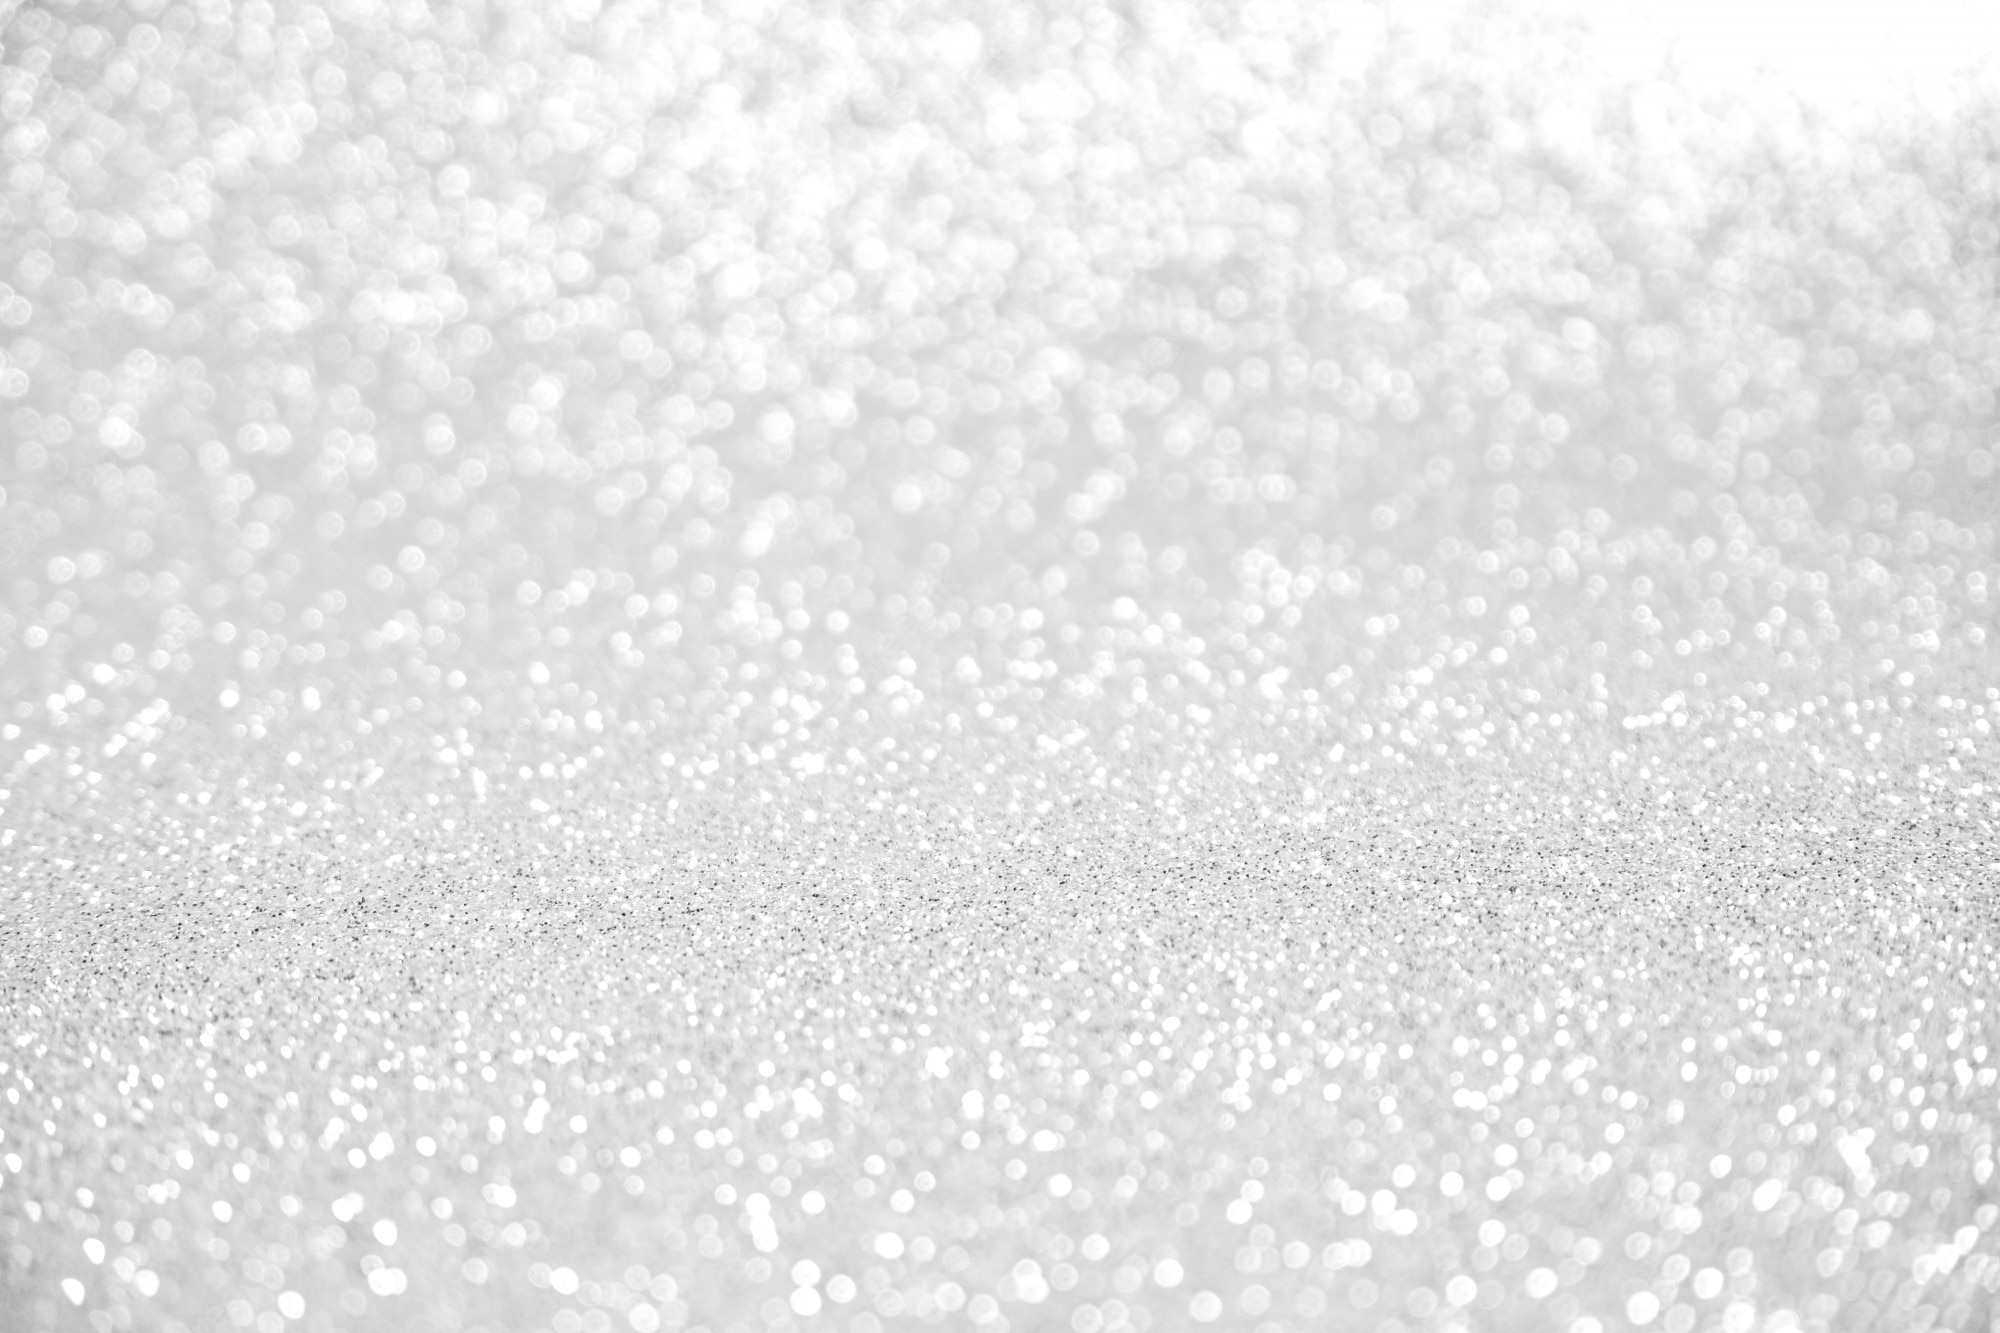 White glitter Image. Free Vectors, & PSD